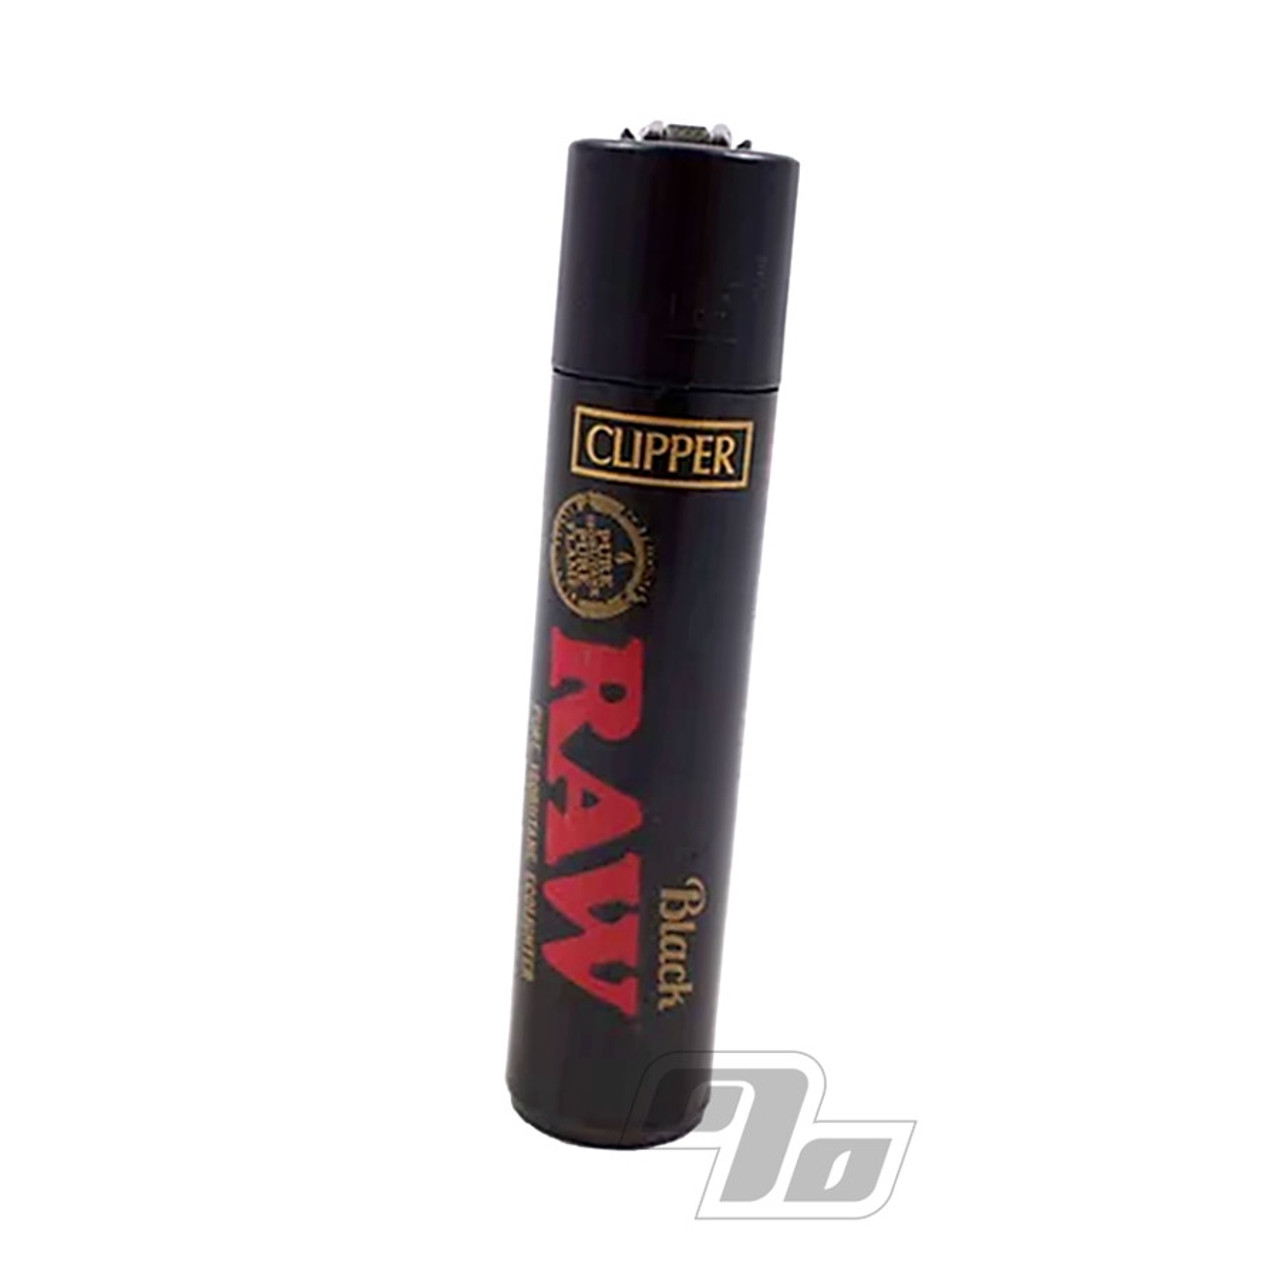 Lighter with RAW Black Design